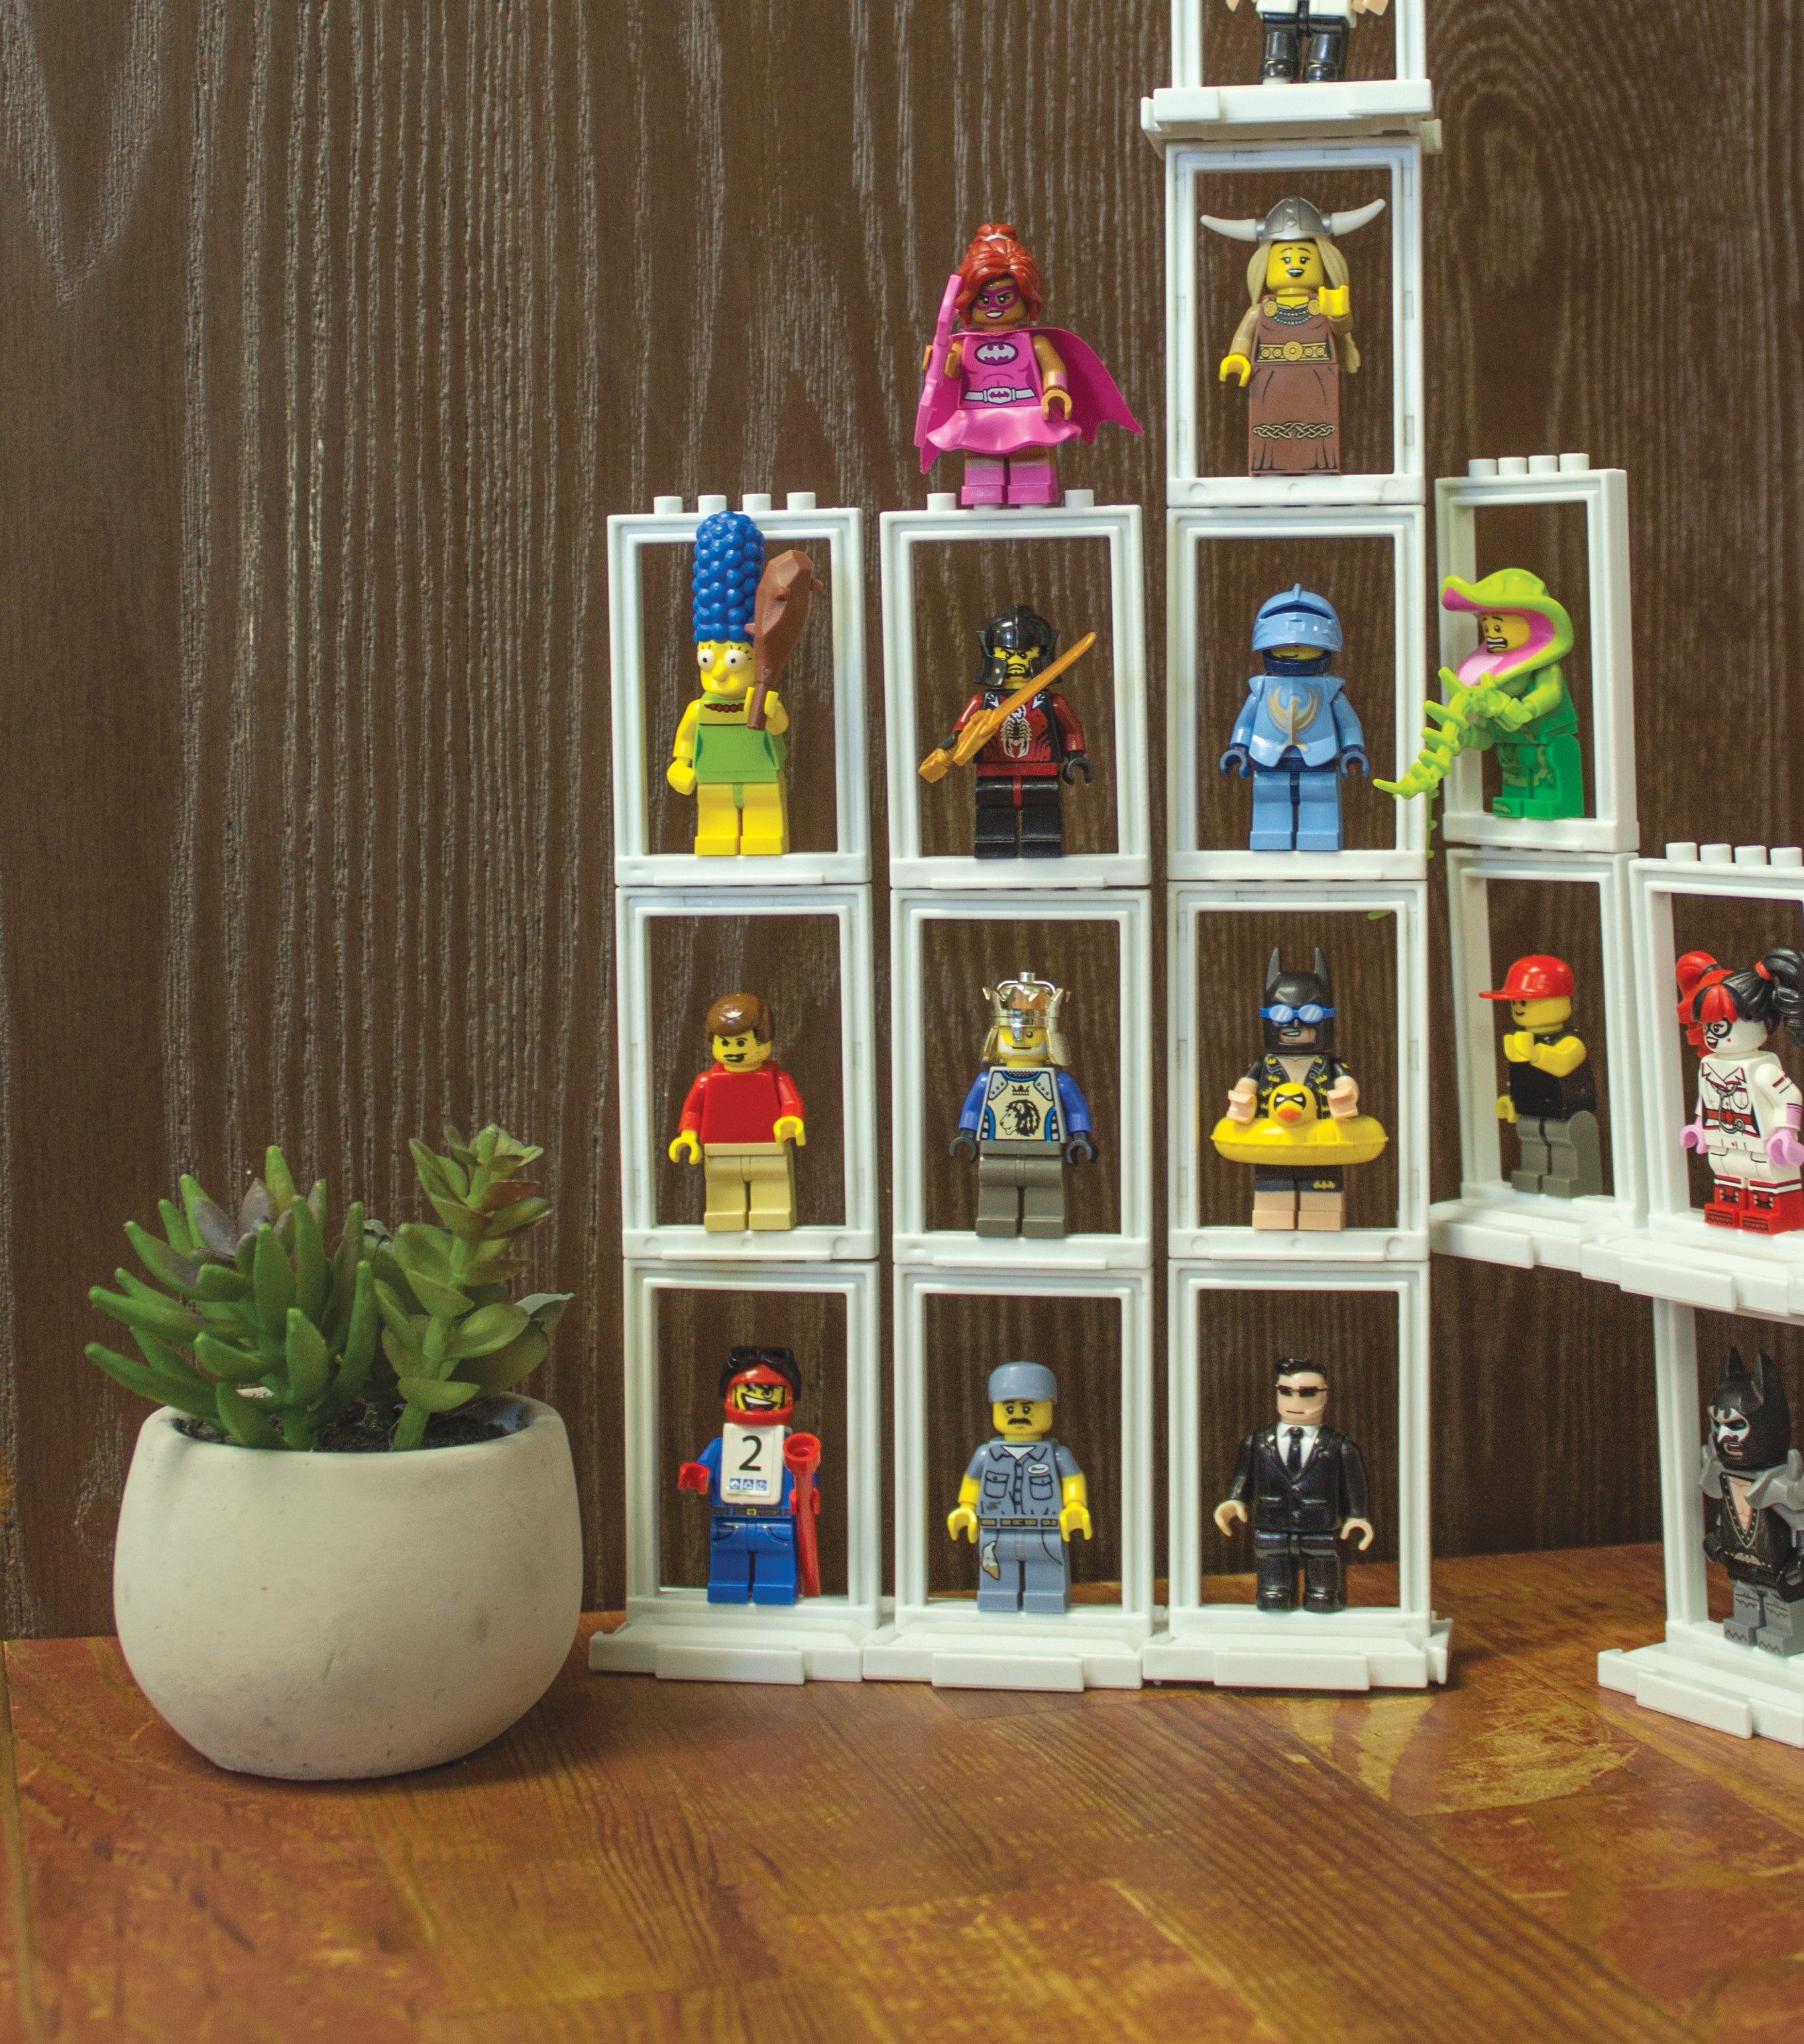 Brick Figure Frames 3-Pack for LEGO Minifigures